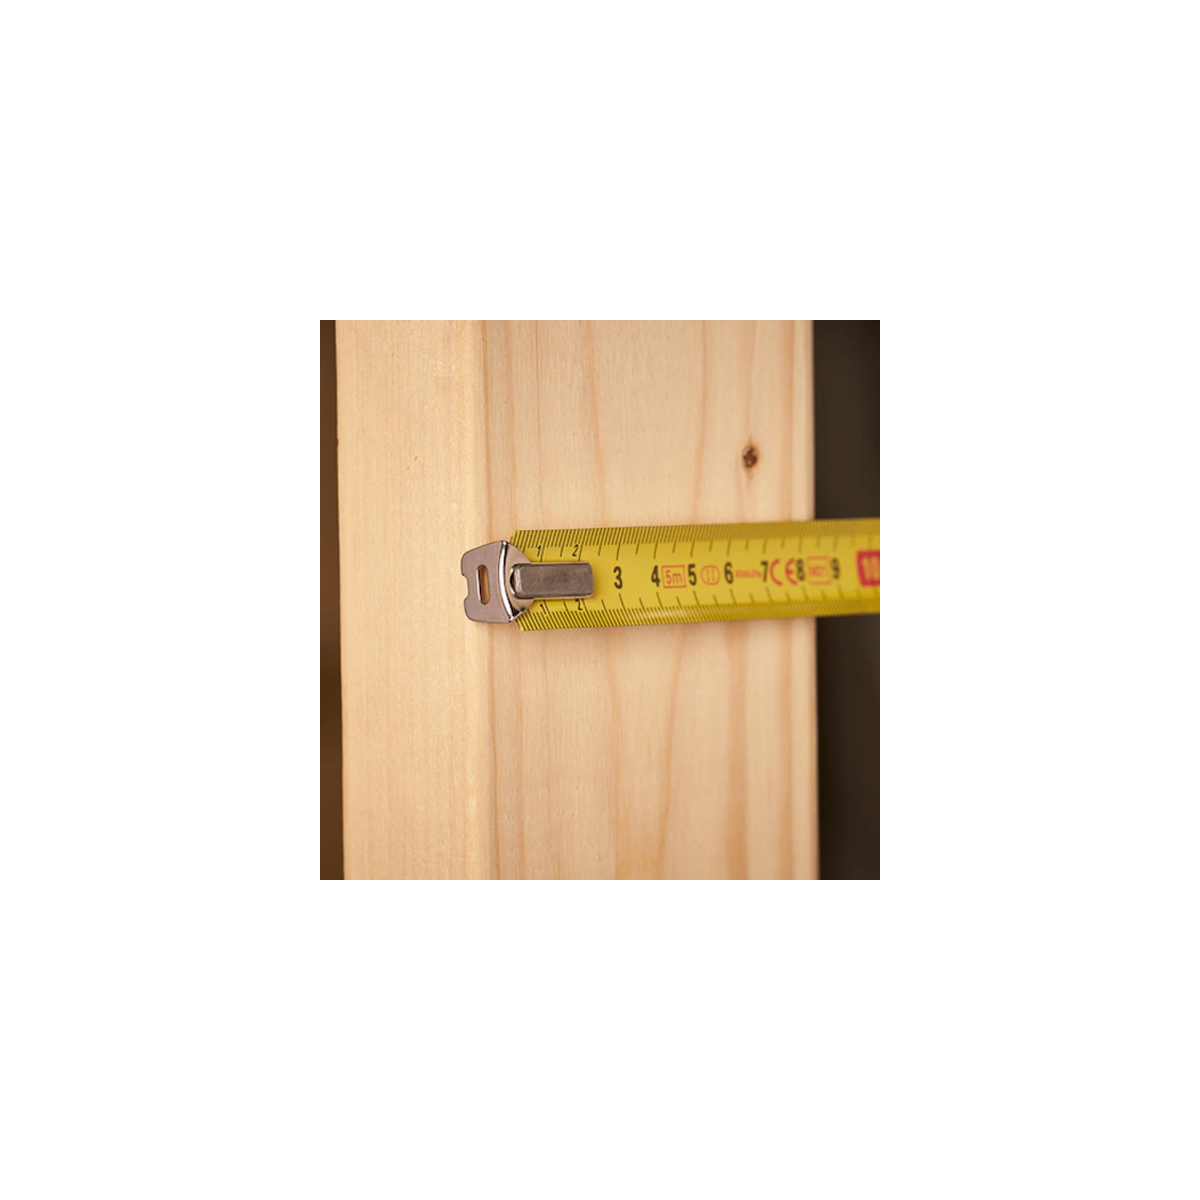 Mètre ruban Powerlock 5m Stanley 0-33-932 - Lepont Equipements